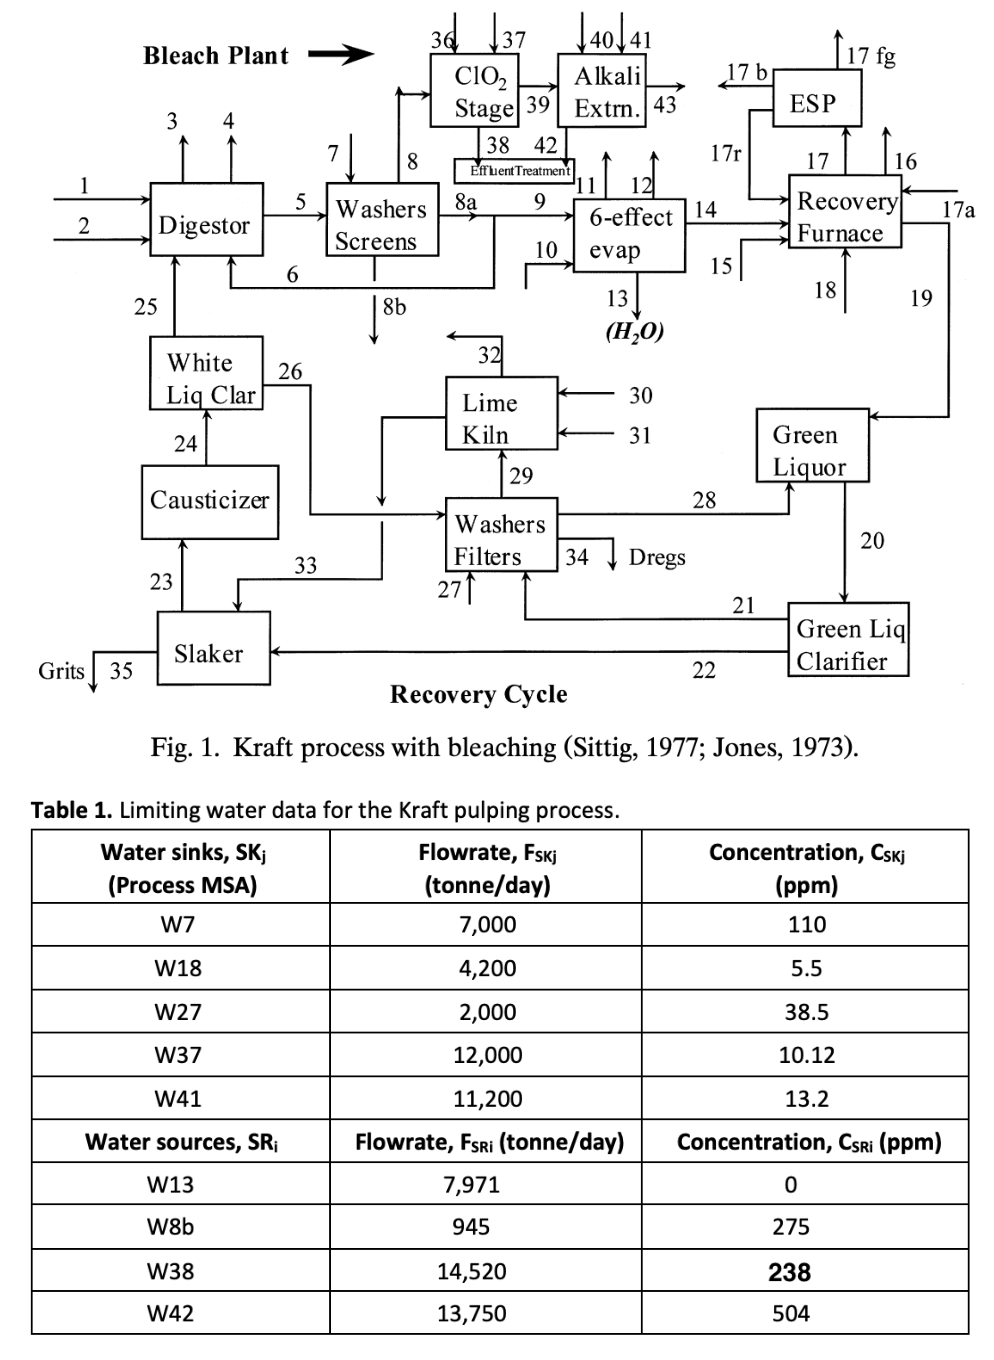 1
2
Bleach Plant
Grits 35
25
3
Digestor
4
White
Liq Clar
24
Causticizer
23
Slaker
W38
W42
6
38 42
Effluent Treatment
5 Washers Sa 9
Screens
10
26
33
7
8
8b
37
C10₂
Alkali
Stage 39 Extrn. 43
32
Lime
Kiln
271
Washers
Filters
29
40 41
14,520
13,750
6-effect 14
evap
13
(H₂O)
Table 1. Limiting water data for the Kraft pulping process.
Water sinks, SK;
Flowrate, Fskj
(Process MSA)
(tonne/day)
W7
7,000
W18
4,200
W27
2,000
W37
12,000
W41
11,200
Water sources, SR₁
Flowrate, Fsri (tonne/day)
W13
7,971
W8b
945
30
31
34 Dregs
17r
17 b
15
28
22
21
ESP
17
Recovery
Furnace
Recovery Cycle
Fig. 1. Kraft process with bleaching (Sittig, 1977; Jones, 1973).
17 fg
18
Green
Liquor
Green Liq
Clarifier
0
275
20
238
504
16
Concentration, Cskj
(ppm)
110
5.5
38.5
10.12
13.2
19
Concentration, CSRi (ppm)
17a